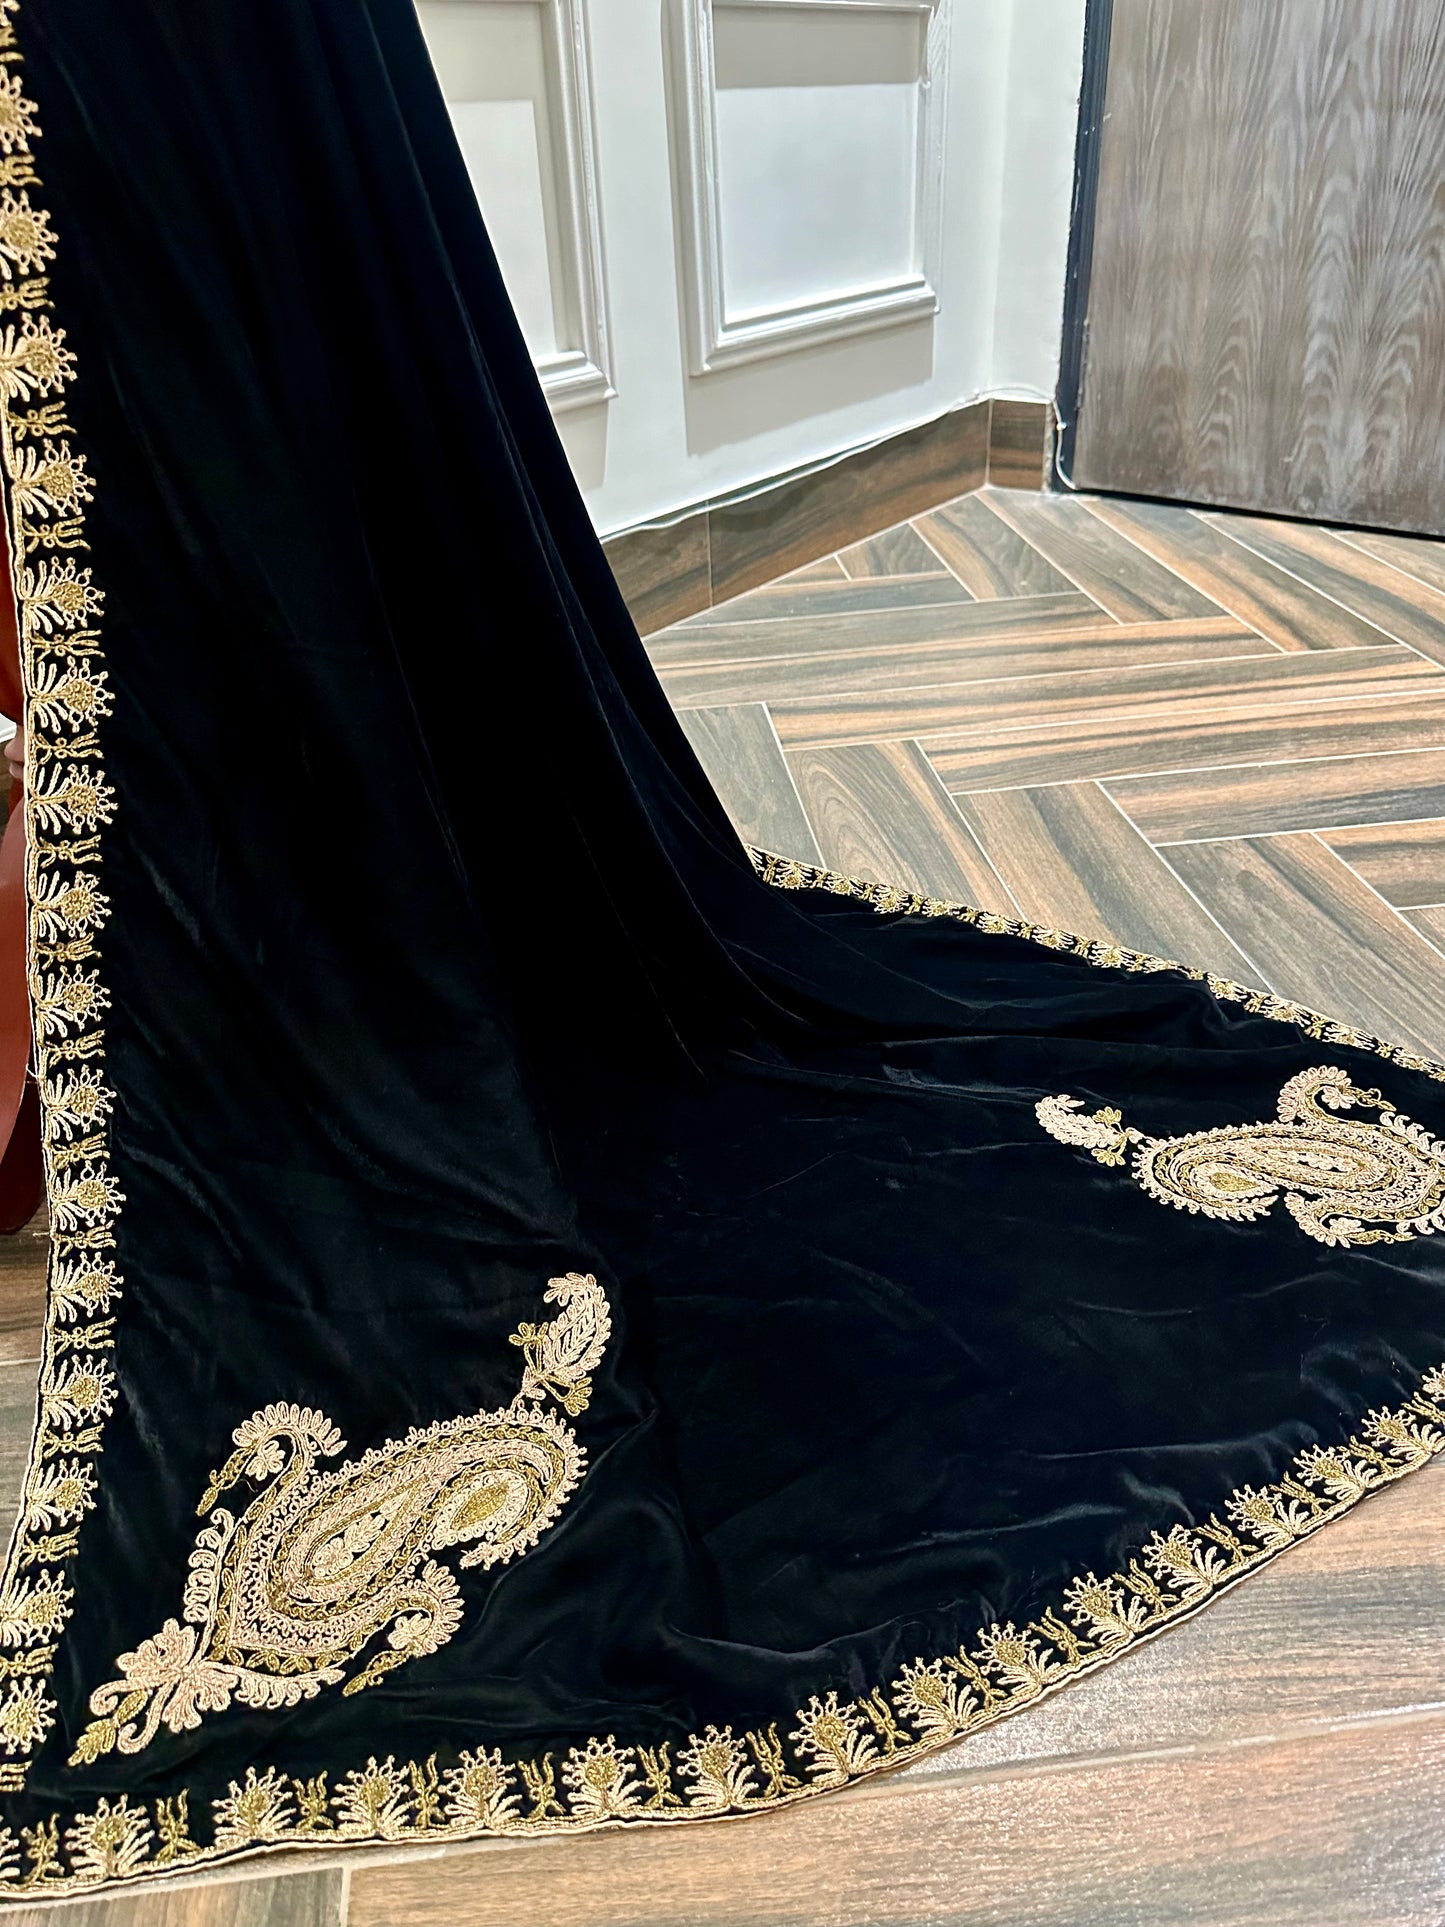 VT-170  kari motive luxury dori work shawl (unisex)